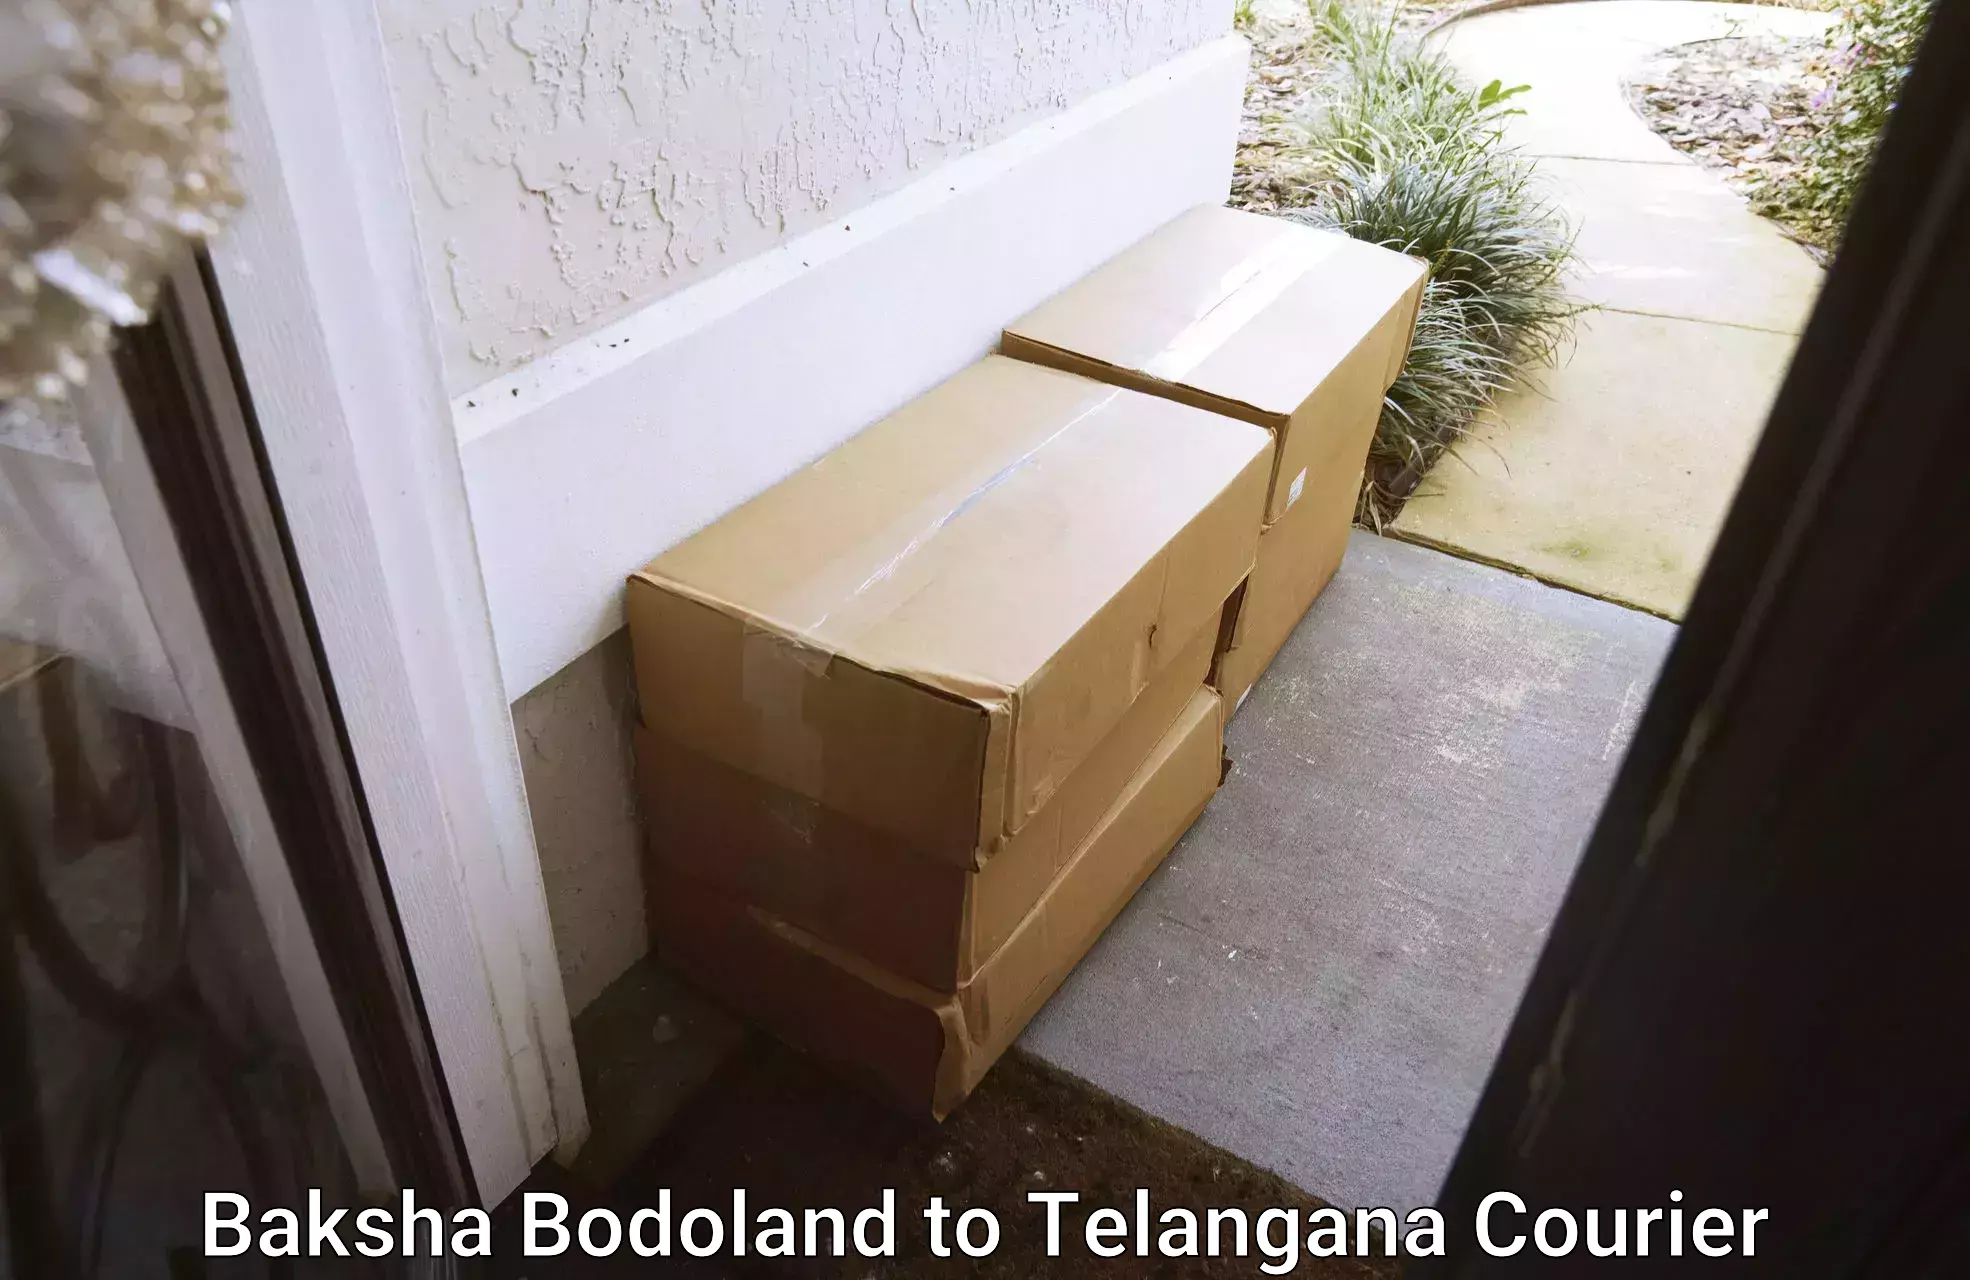 Professional parcel services Baksha Bodoland to Gollapalli